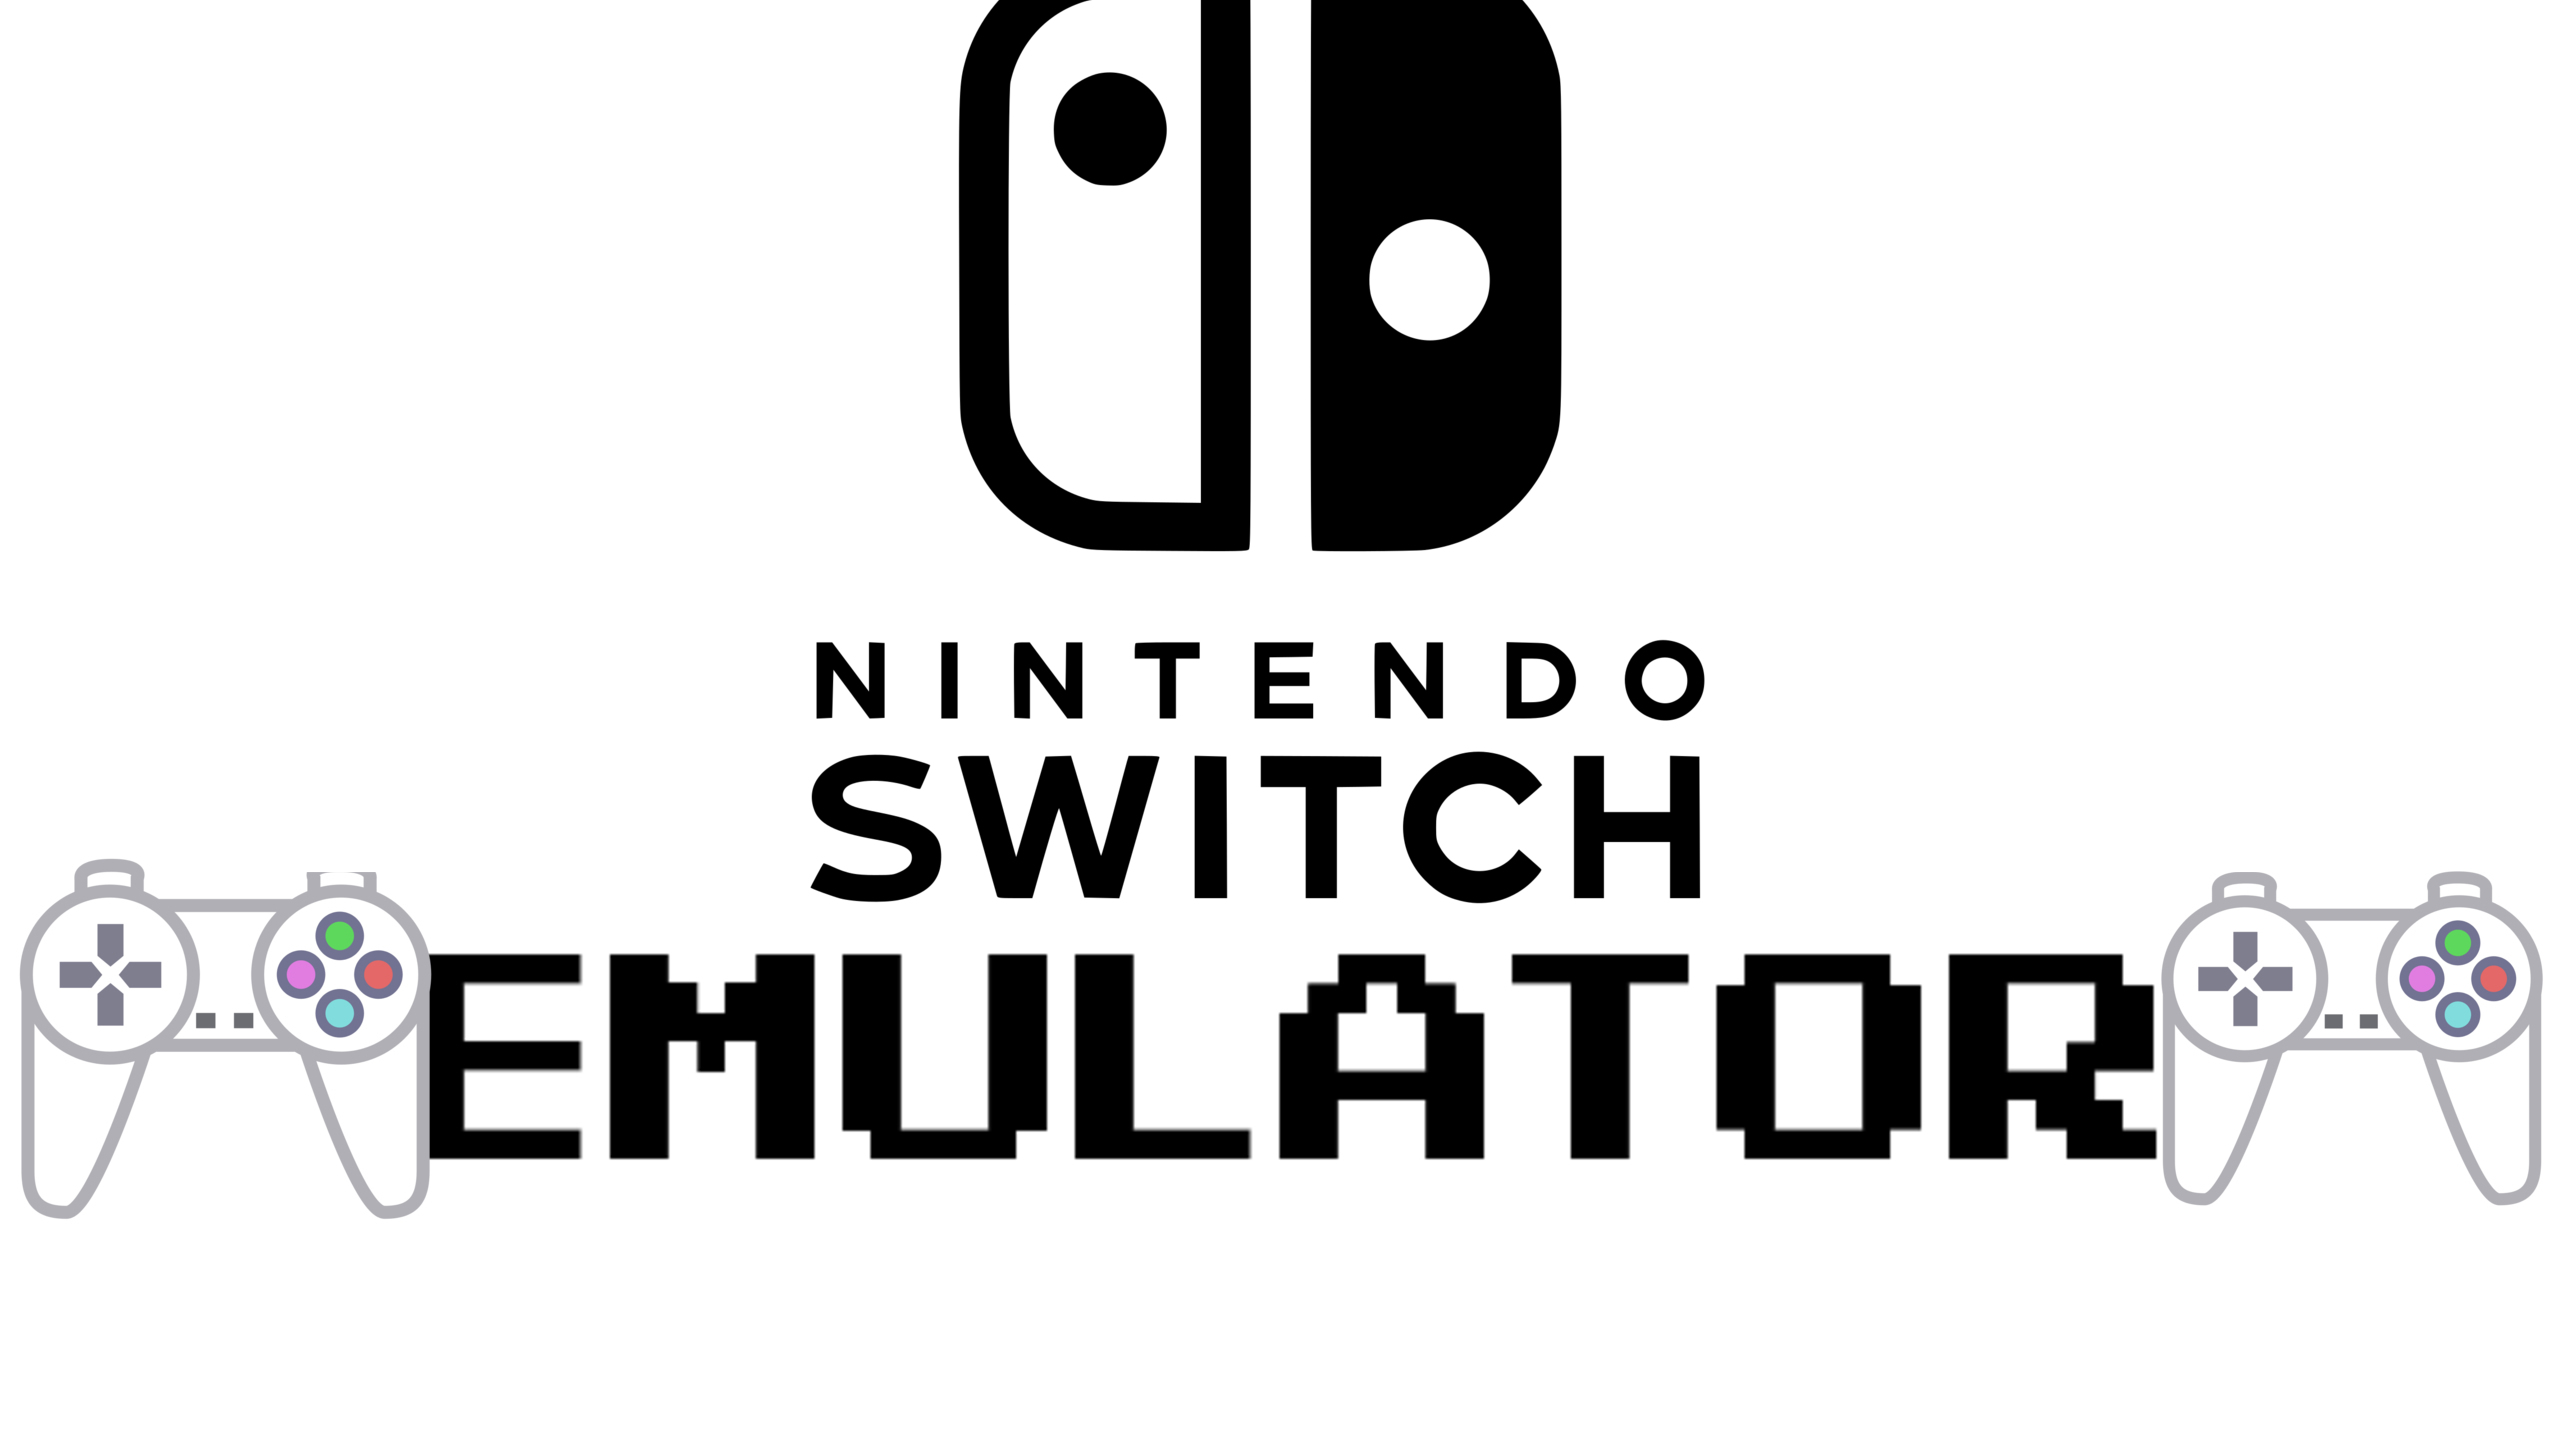 emulator nintendo switch games on nvidia shield